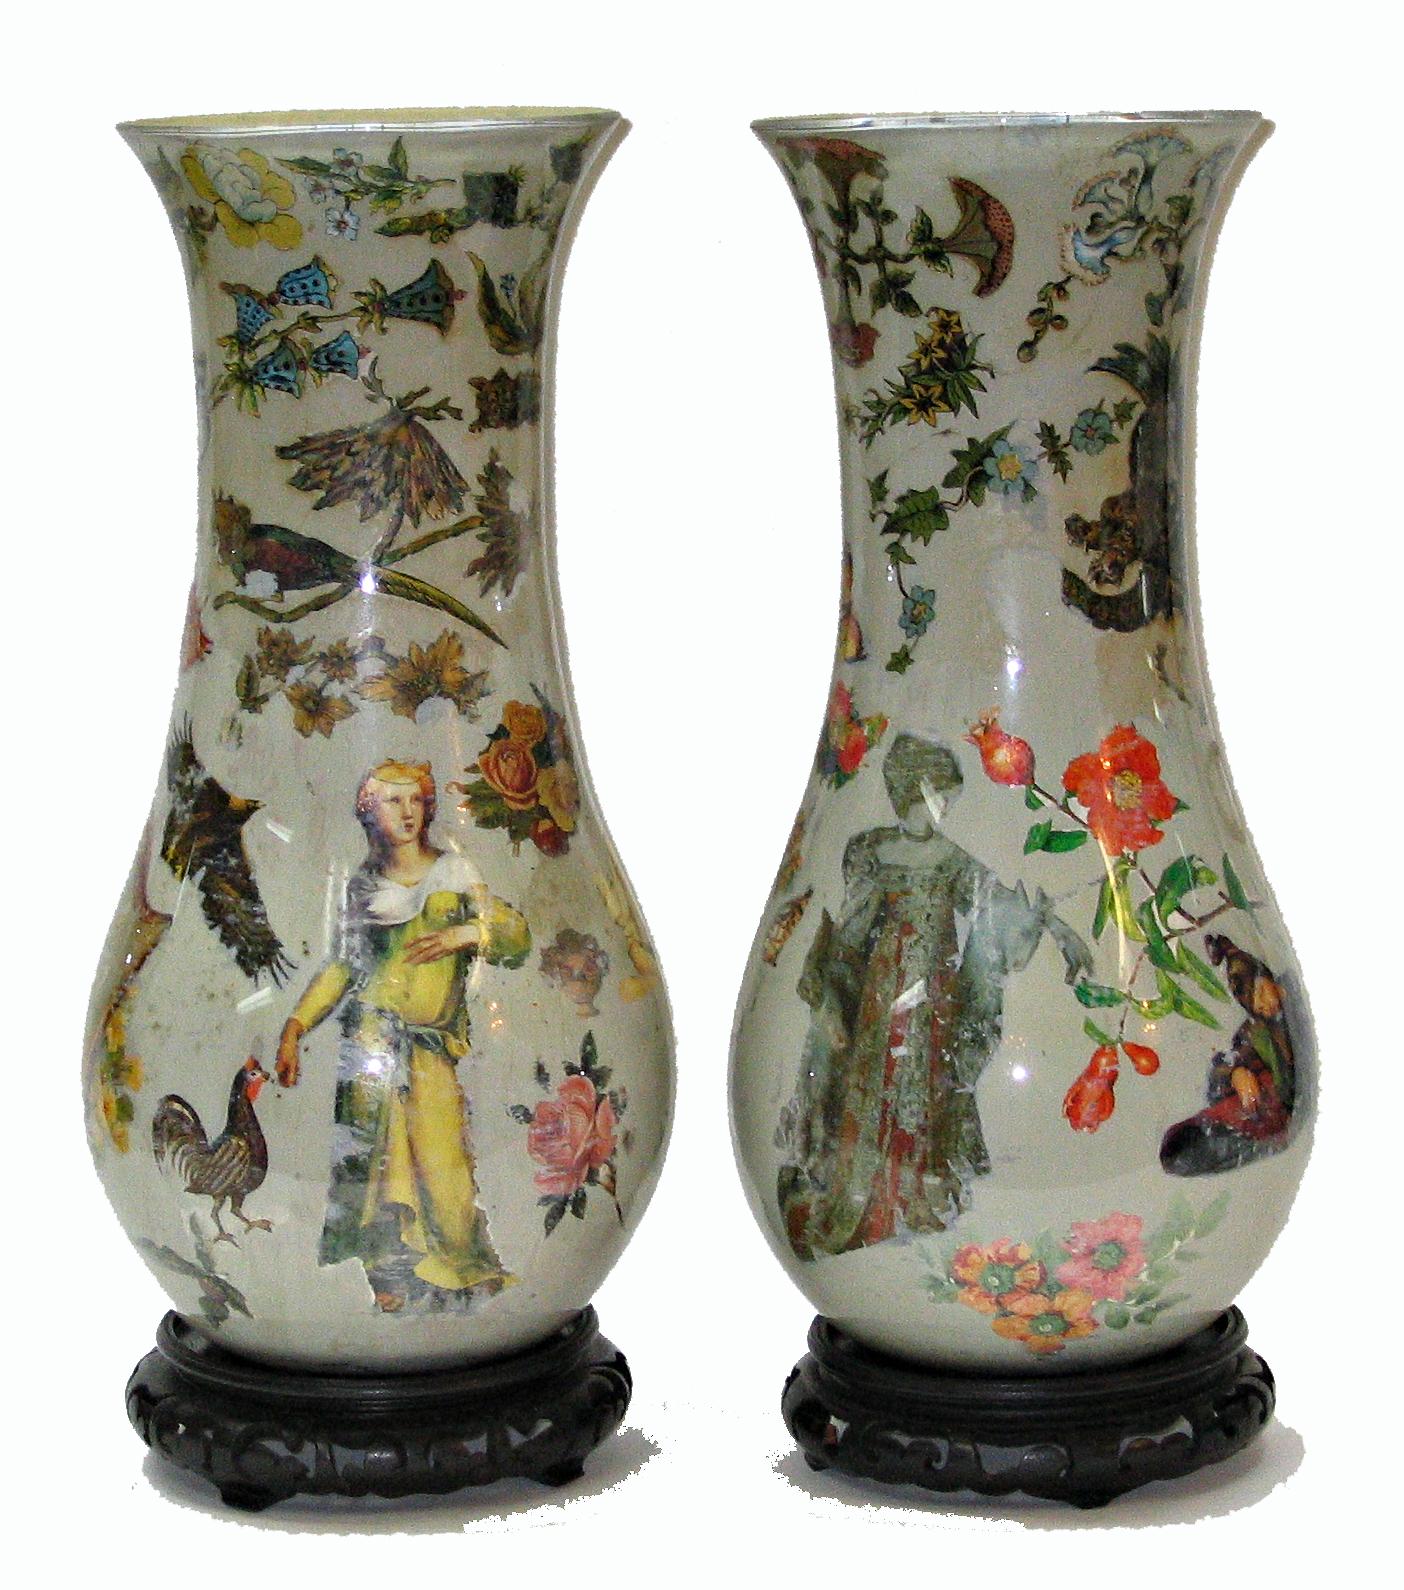 19th Century Pair of Reverse Polychrome Decorated Decalcomania Vases, Italian, circa 1860